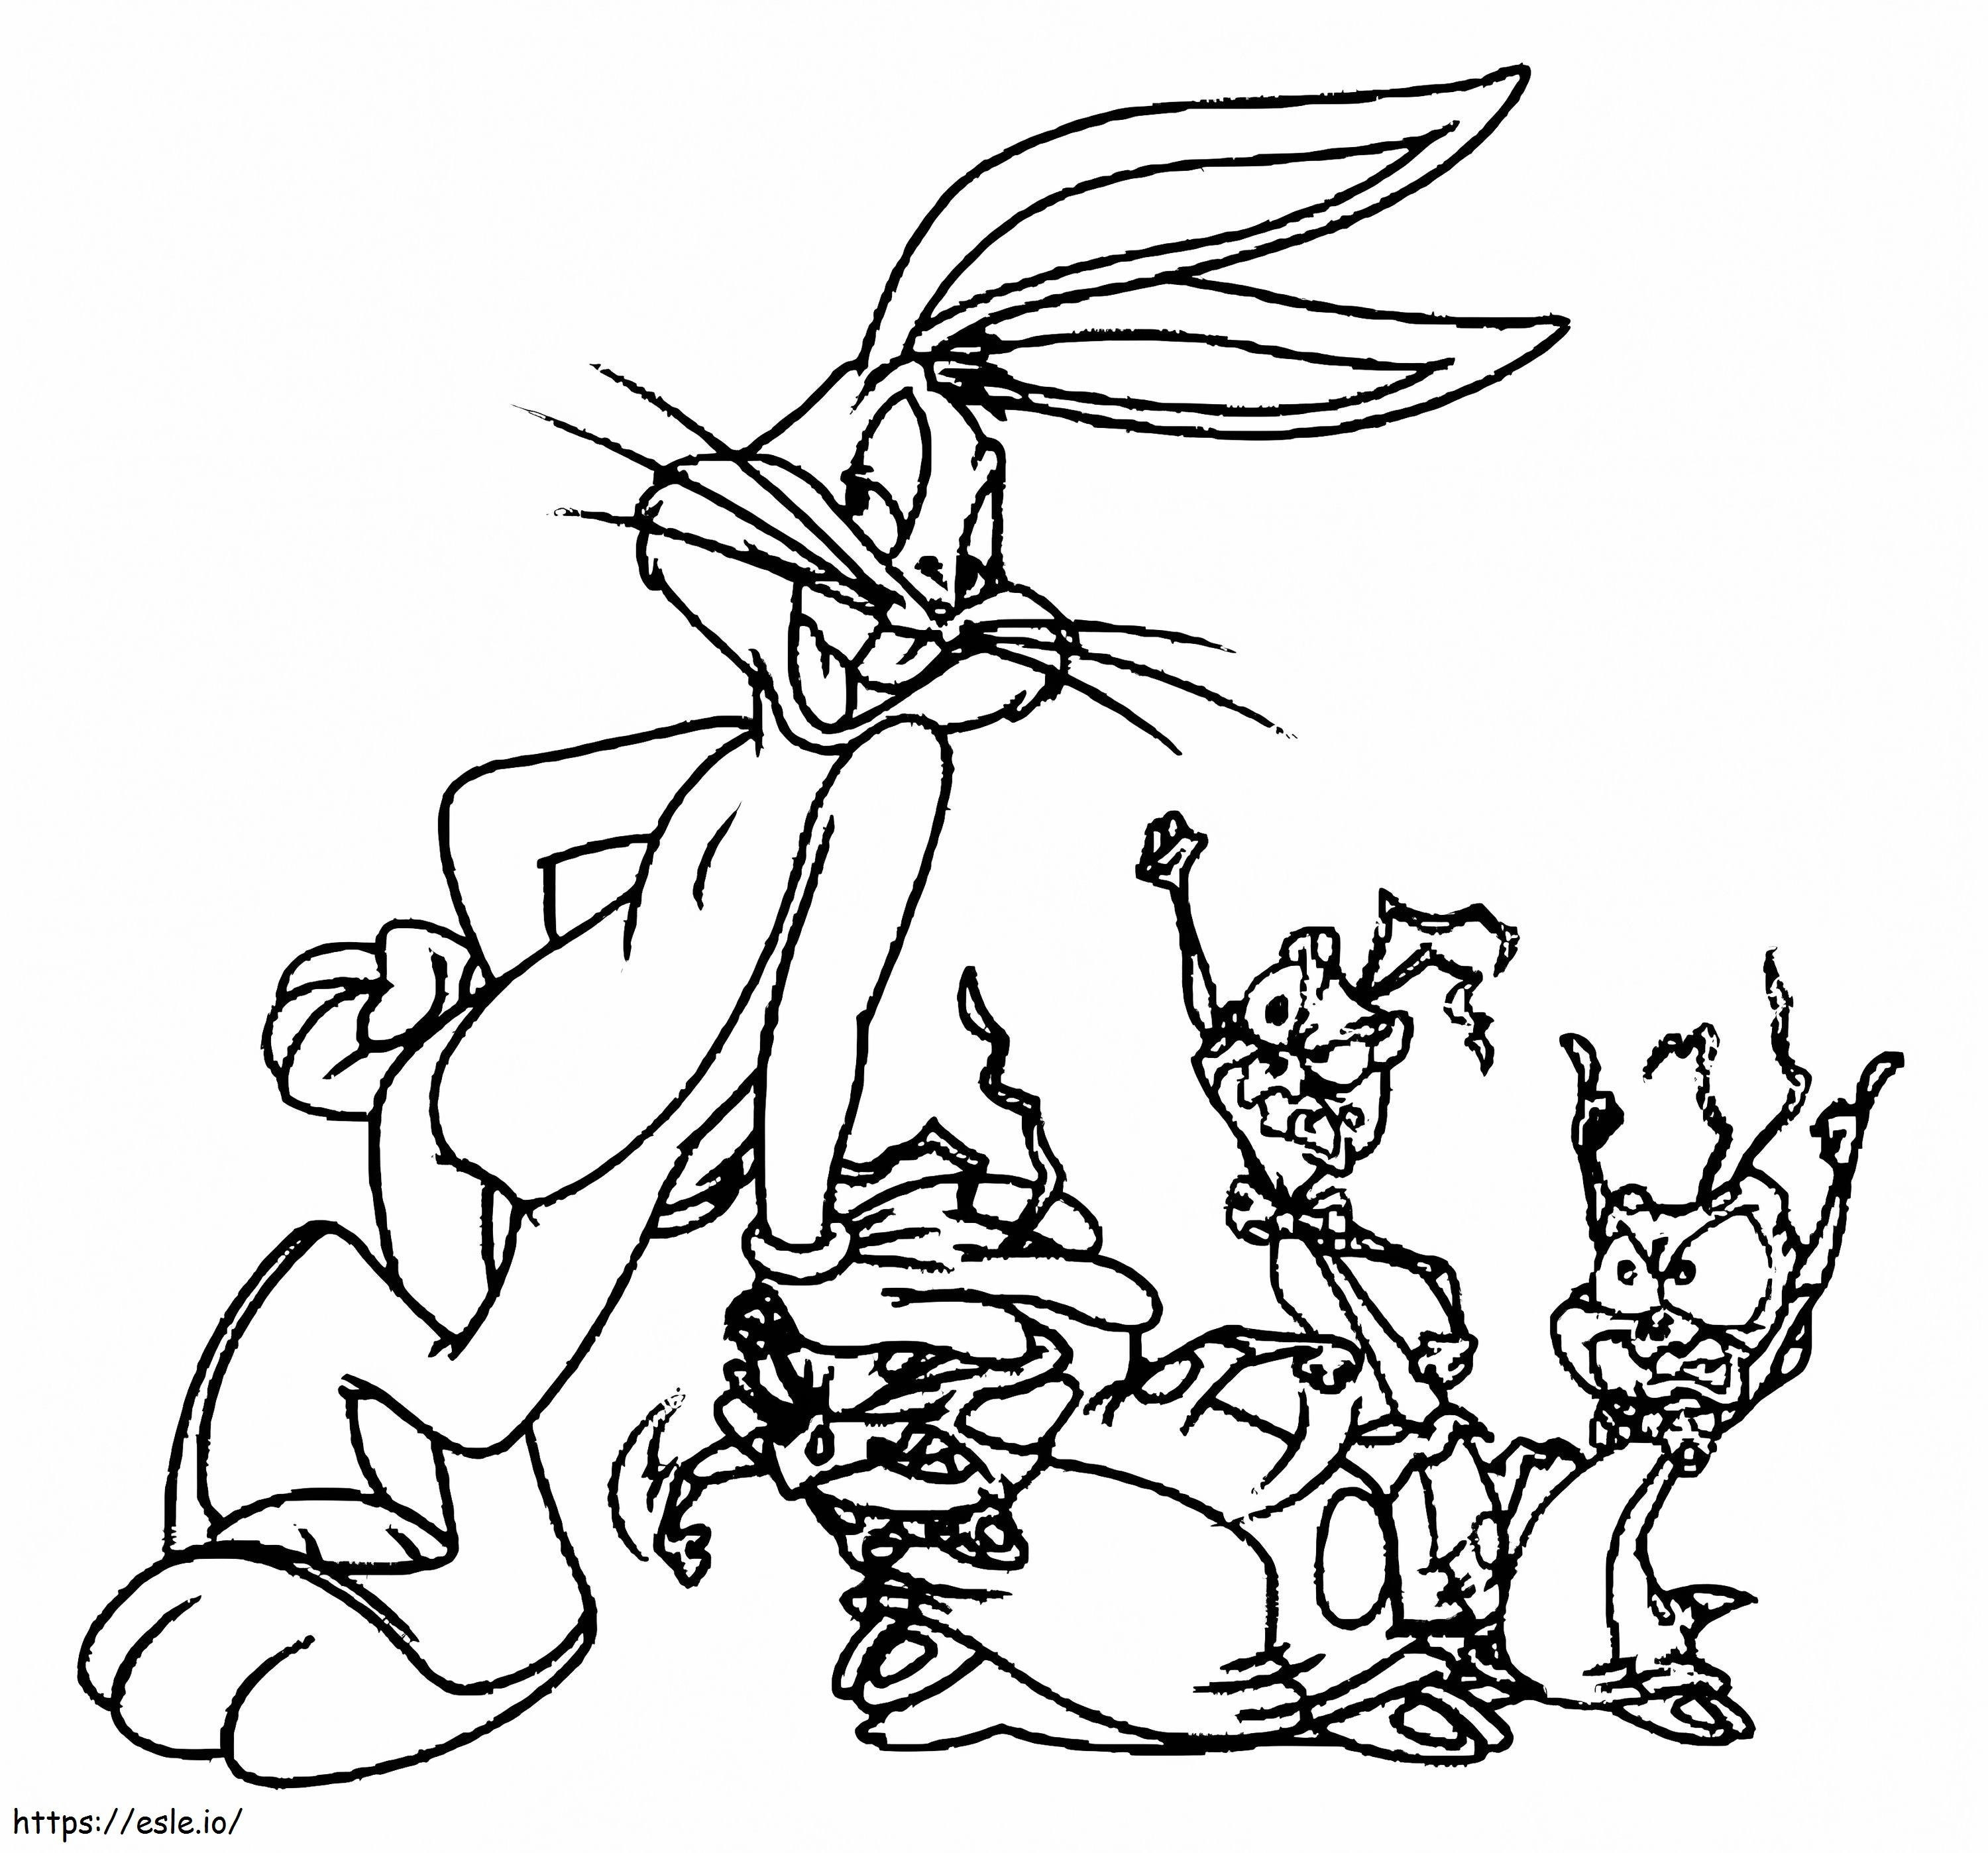 Bugs Bunny ve Nerdluck boyama